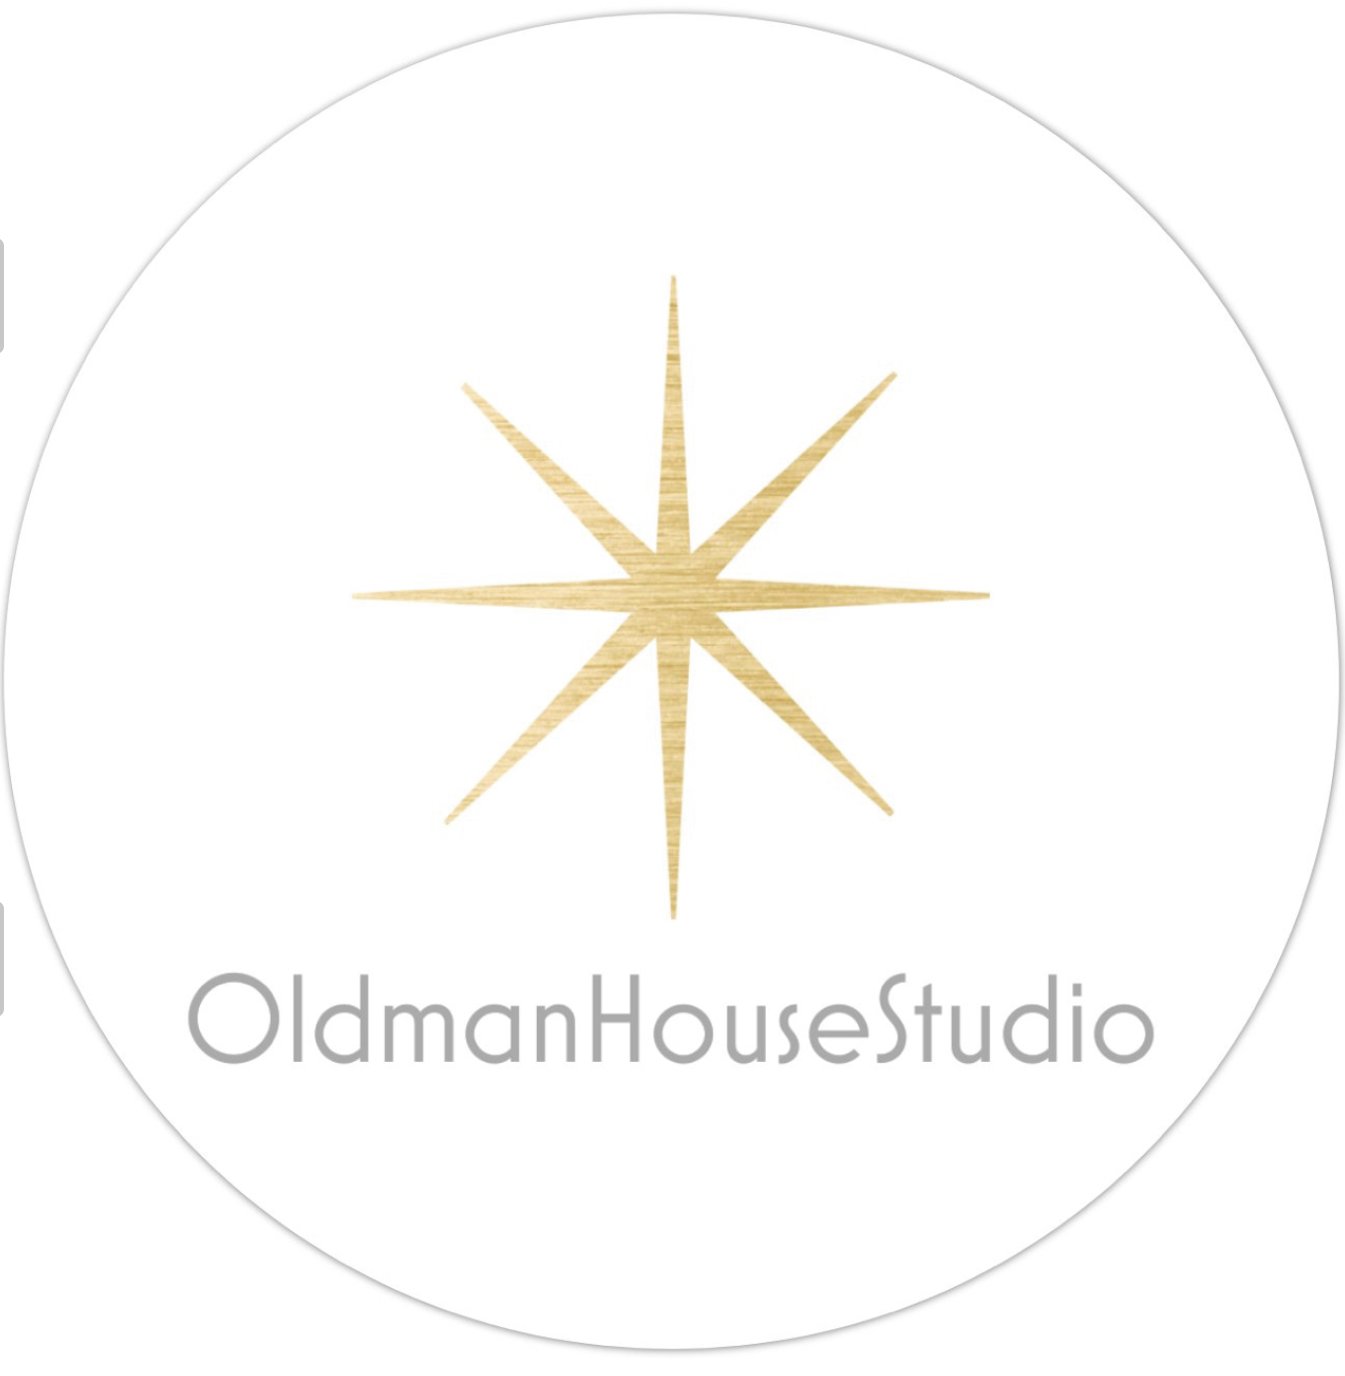 Oldman House Studio logo